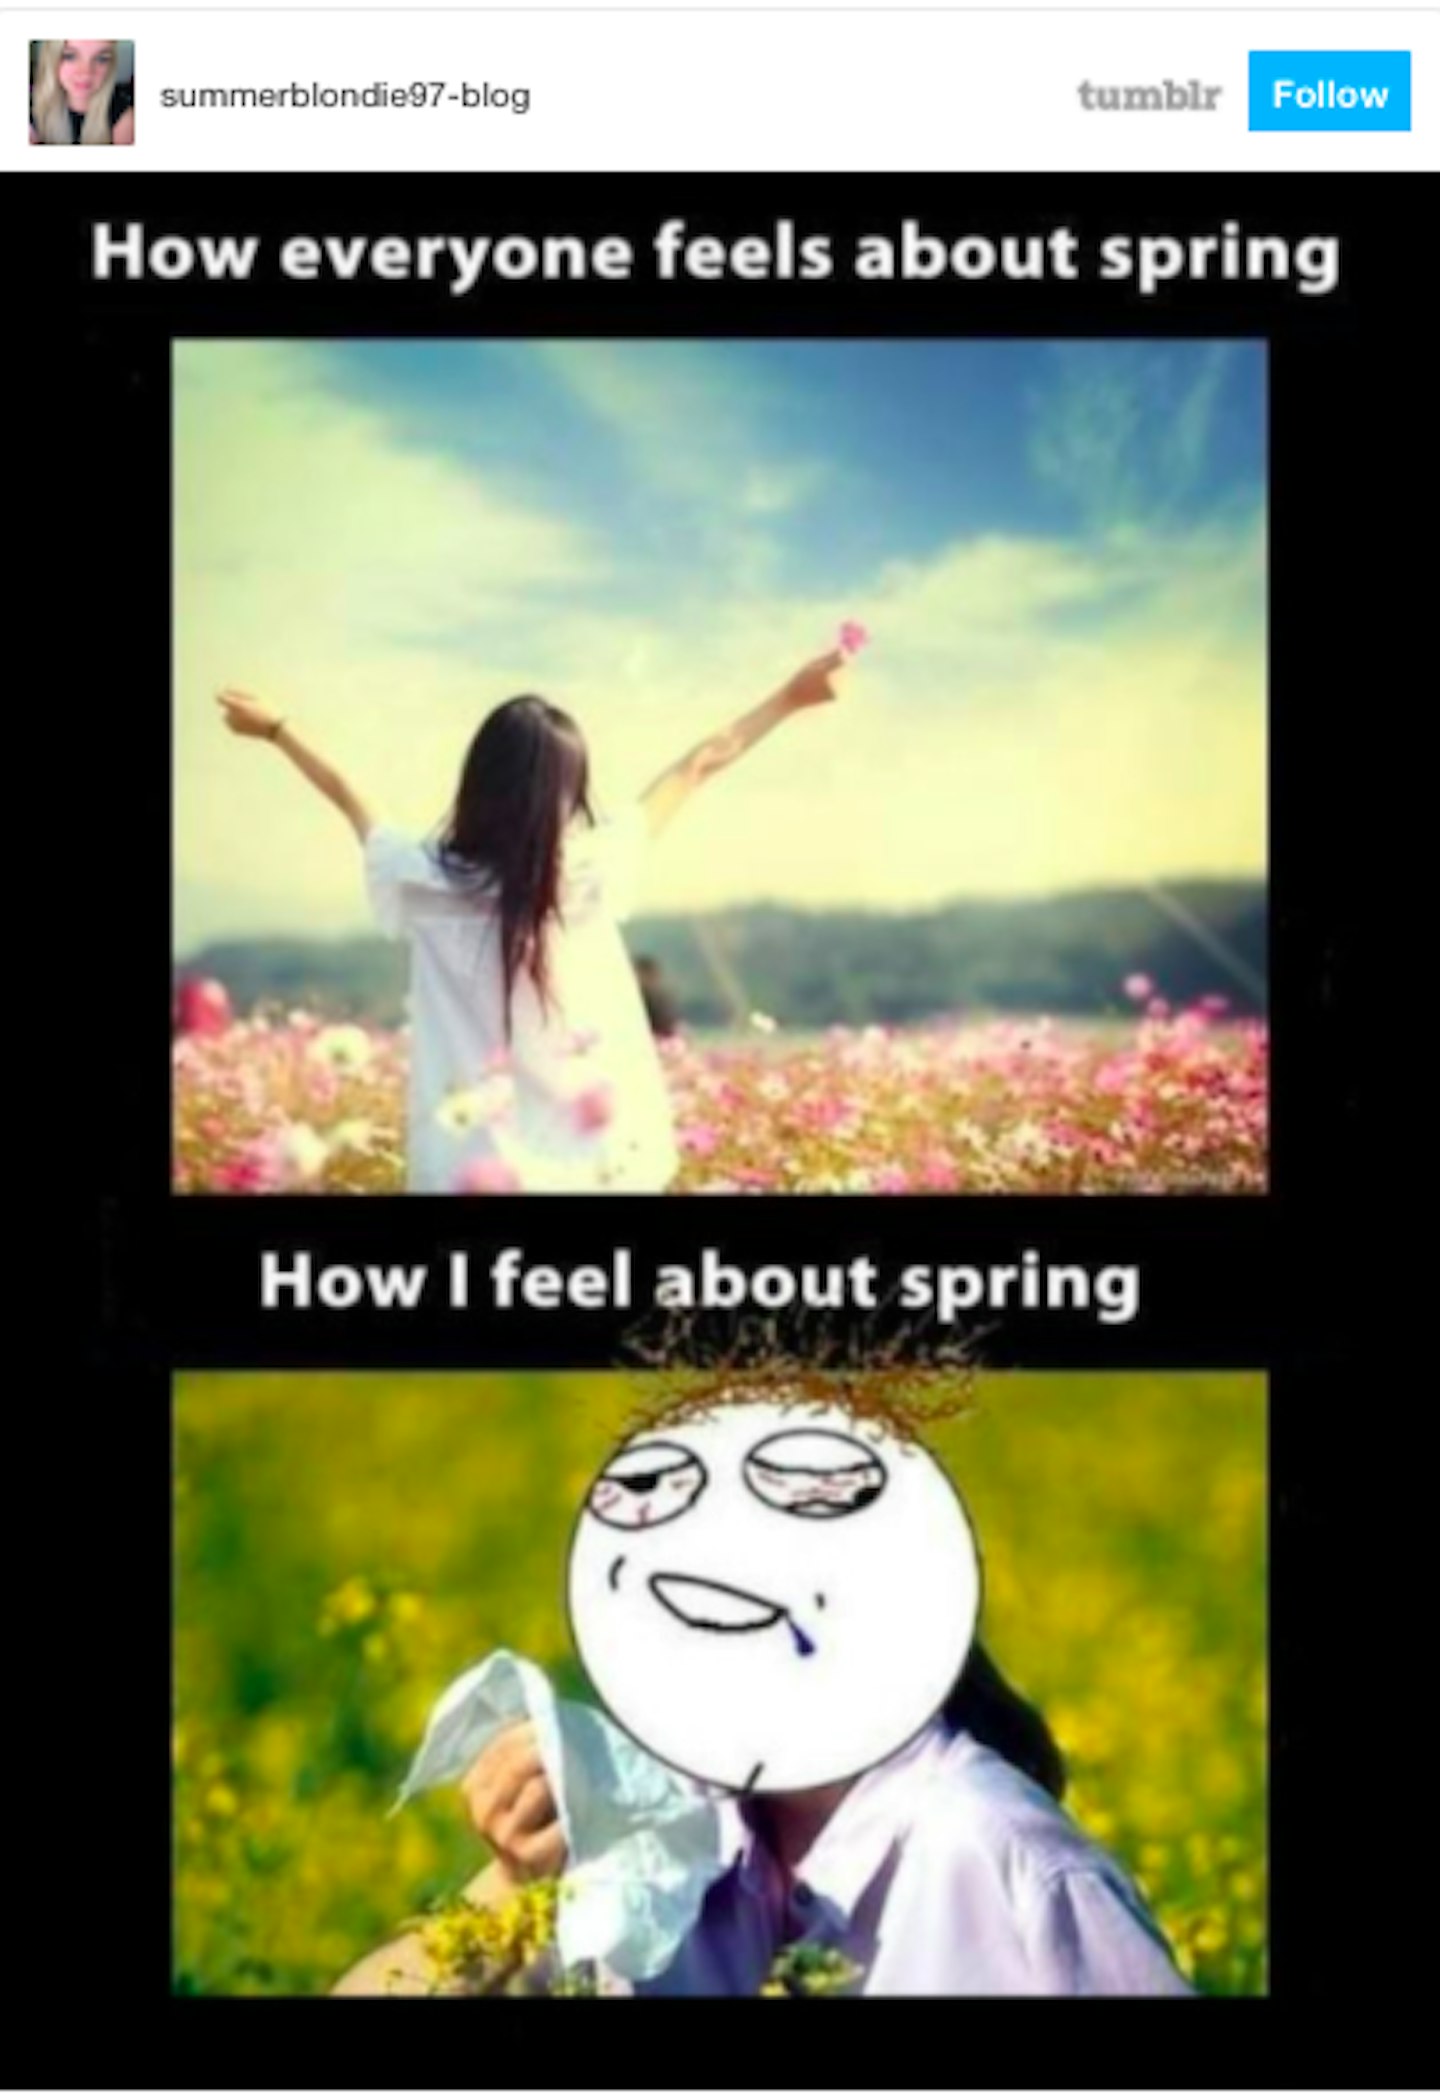 The Best Hay Fever Memes - Grazia